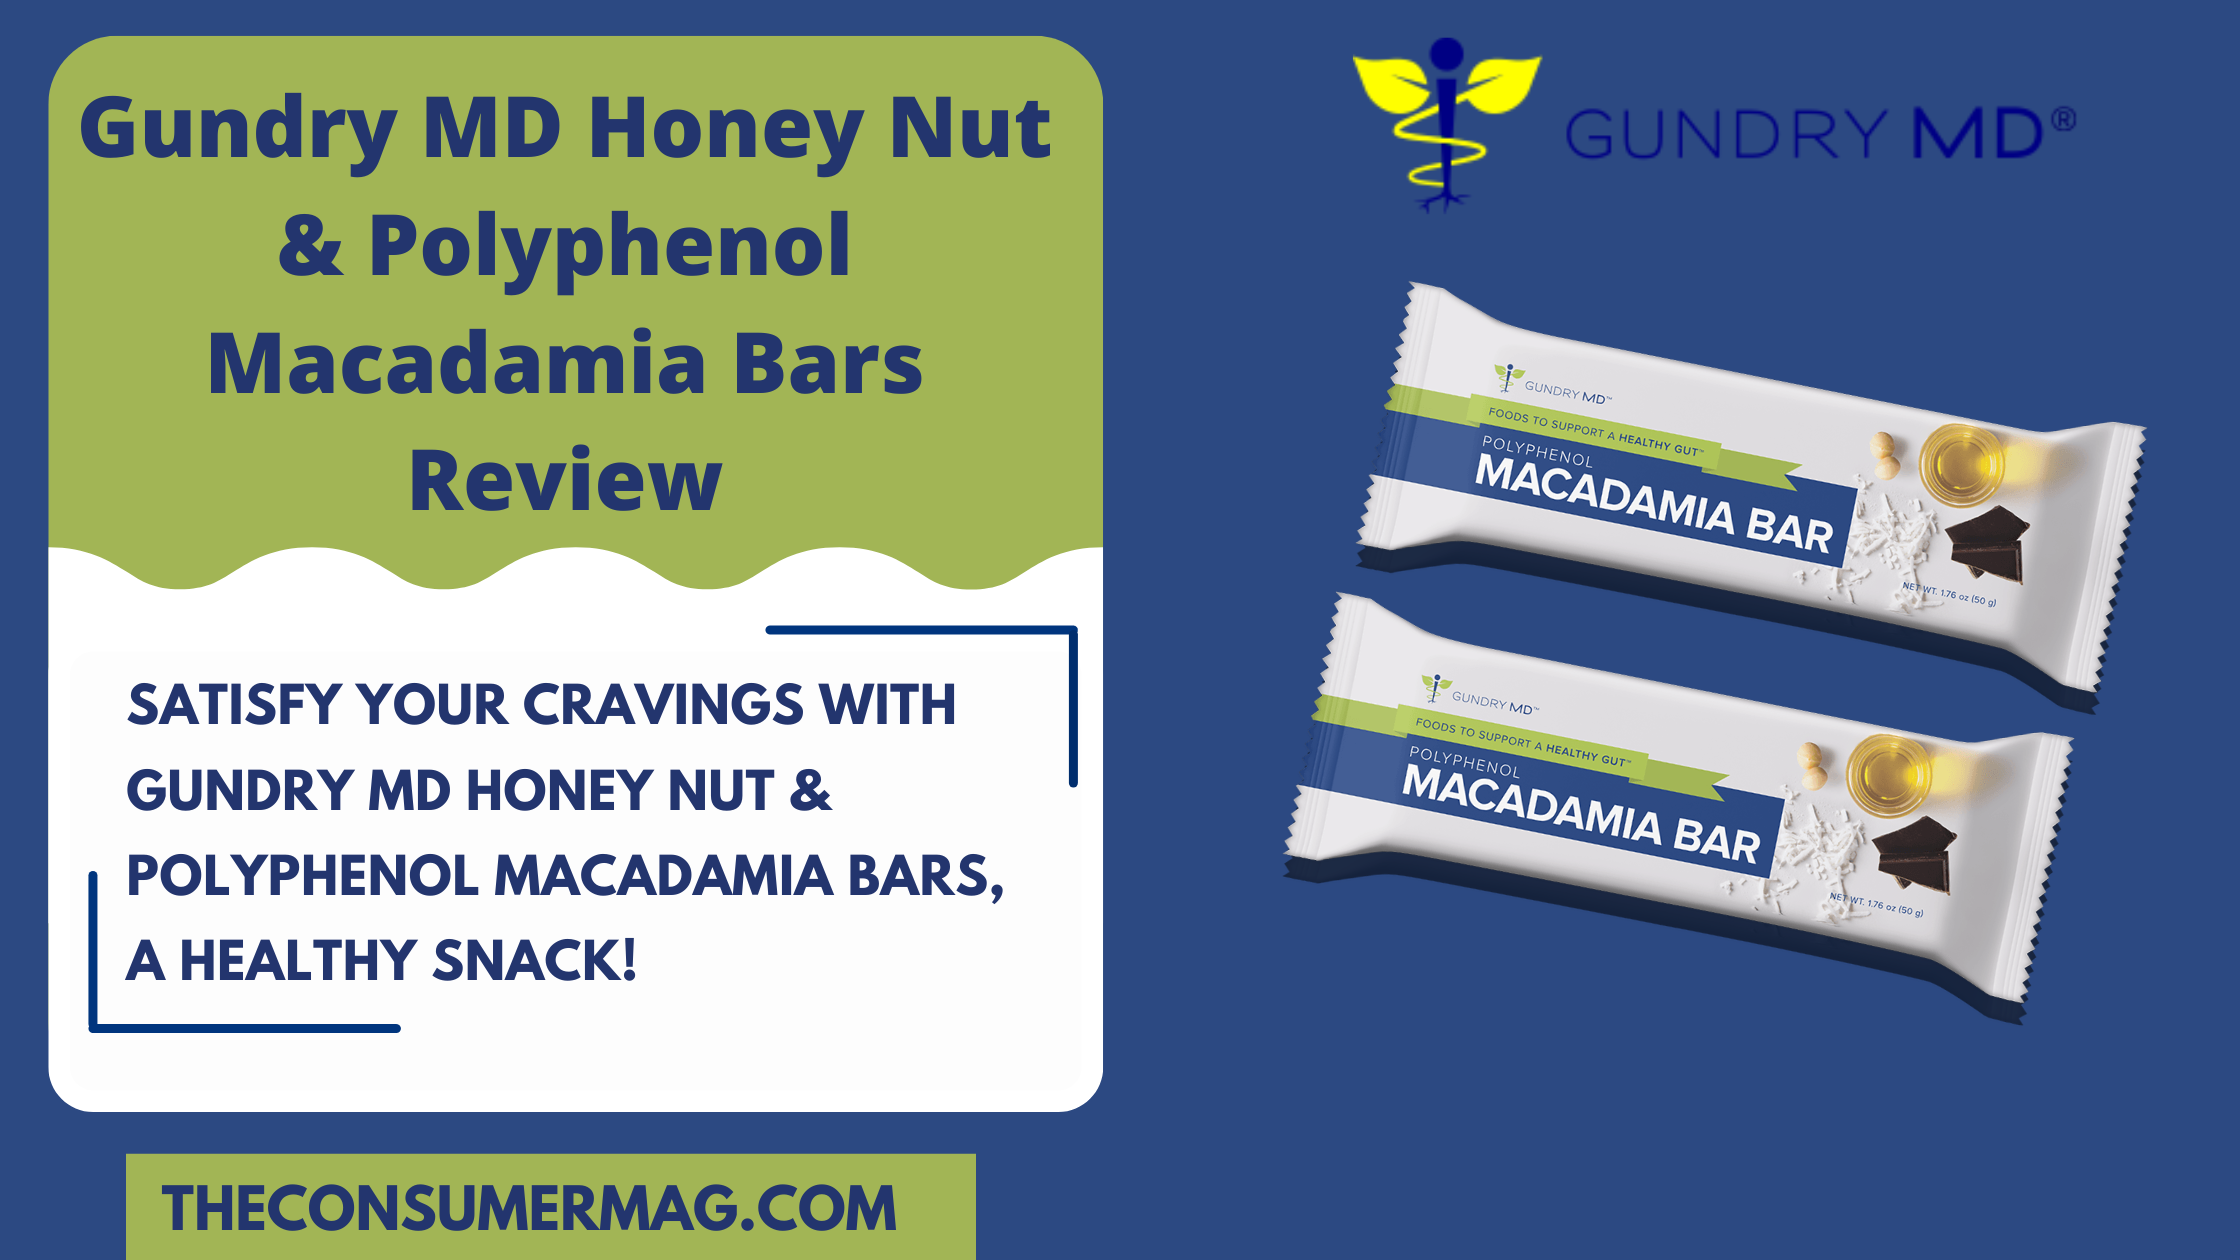 Gundry MD Honey Nut & Polyphenol Macadamia Bars Review